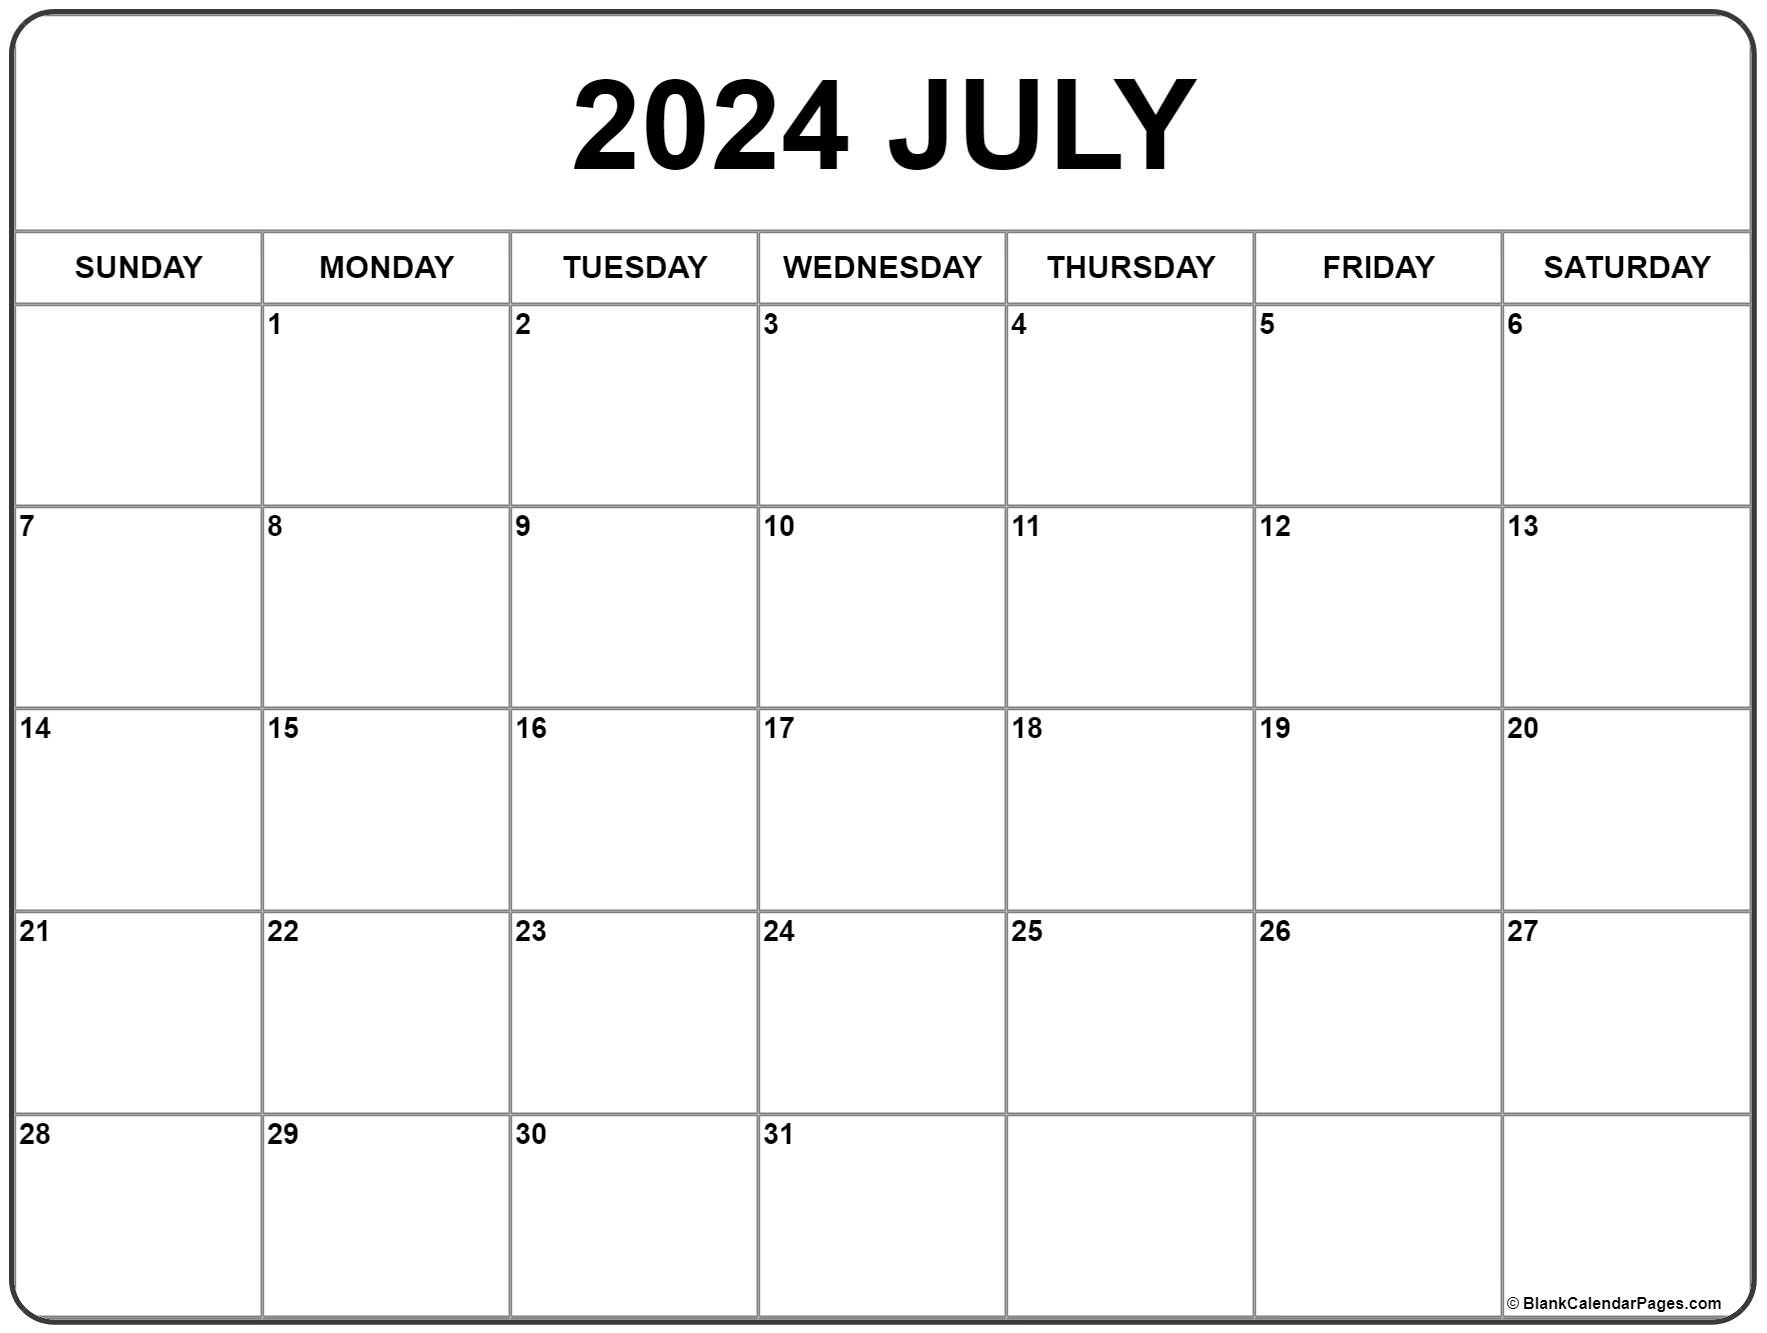 July 2024 Calendar | Free Printable Calendar pertaining to Free July 2024 Calendar Printable